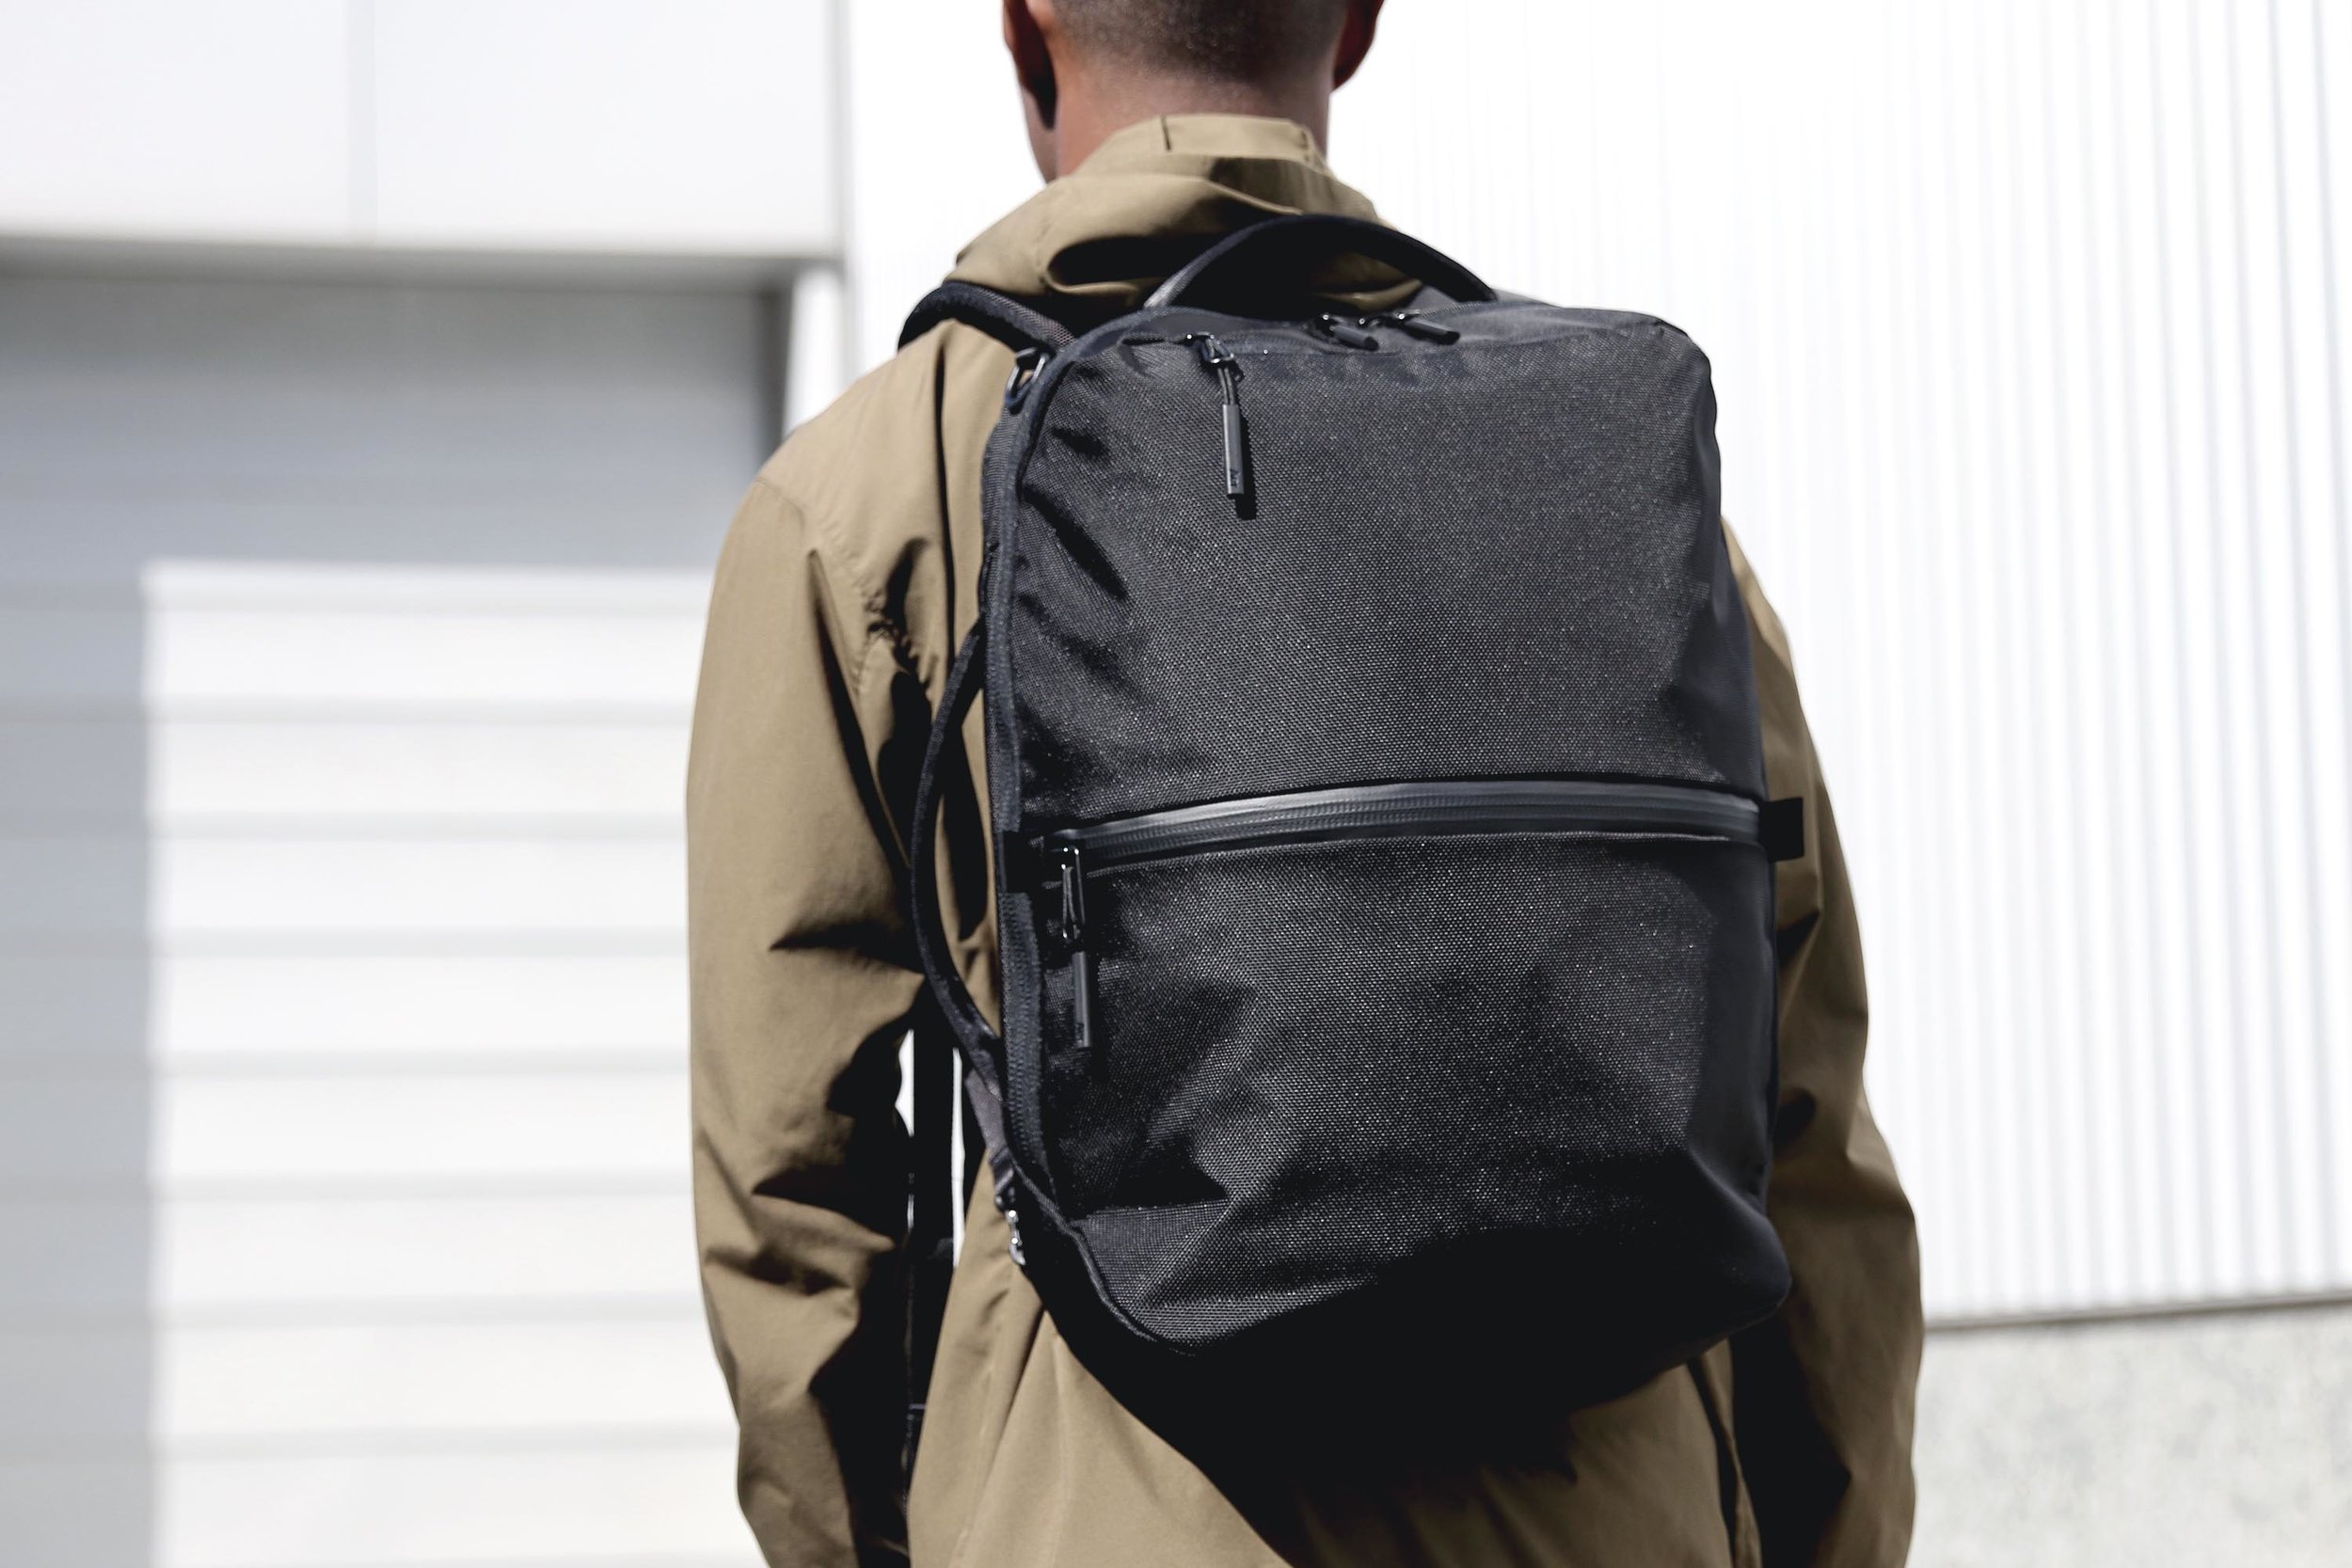 Flight Pack - Black — Aer | Modern gym bags, travel backpacks and 